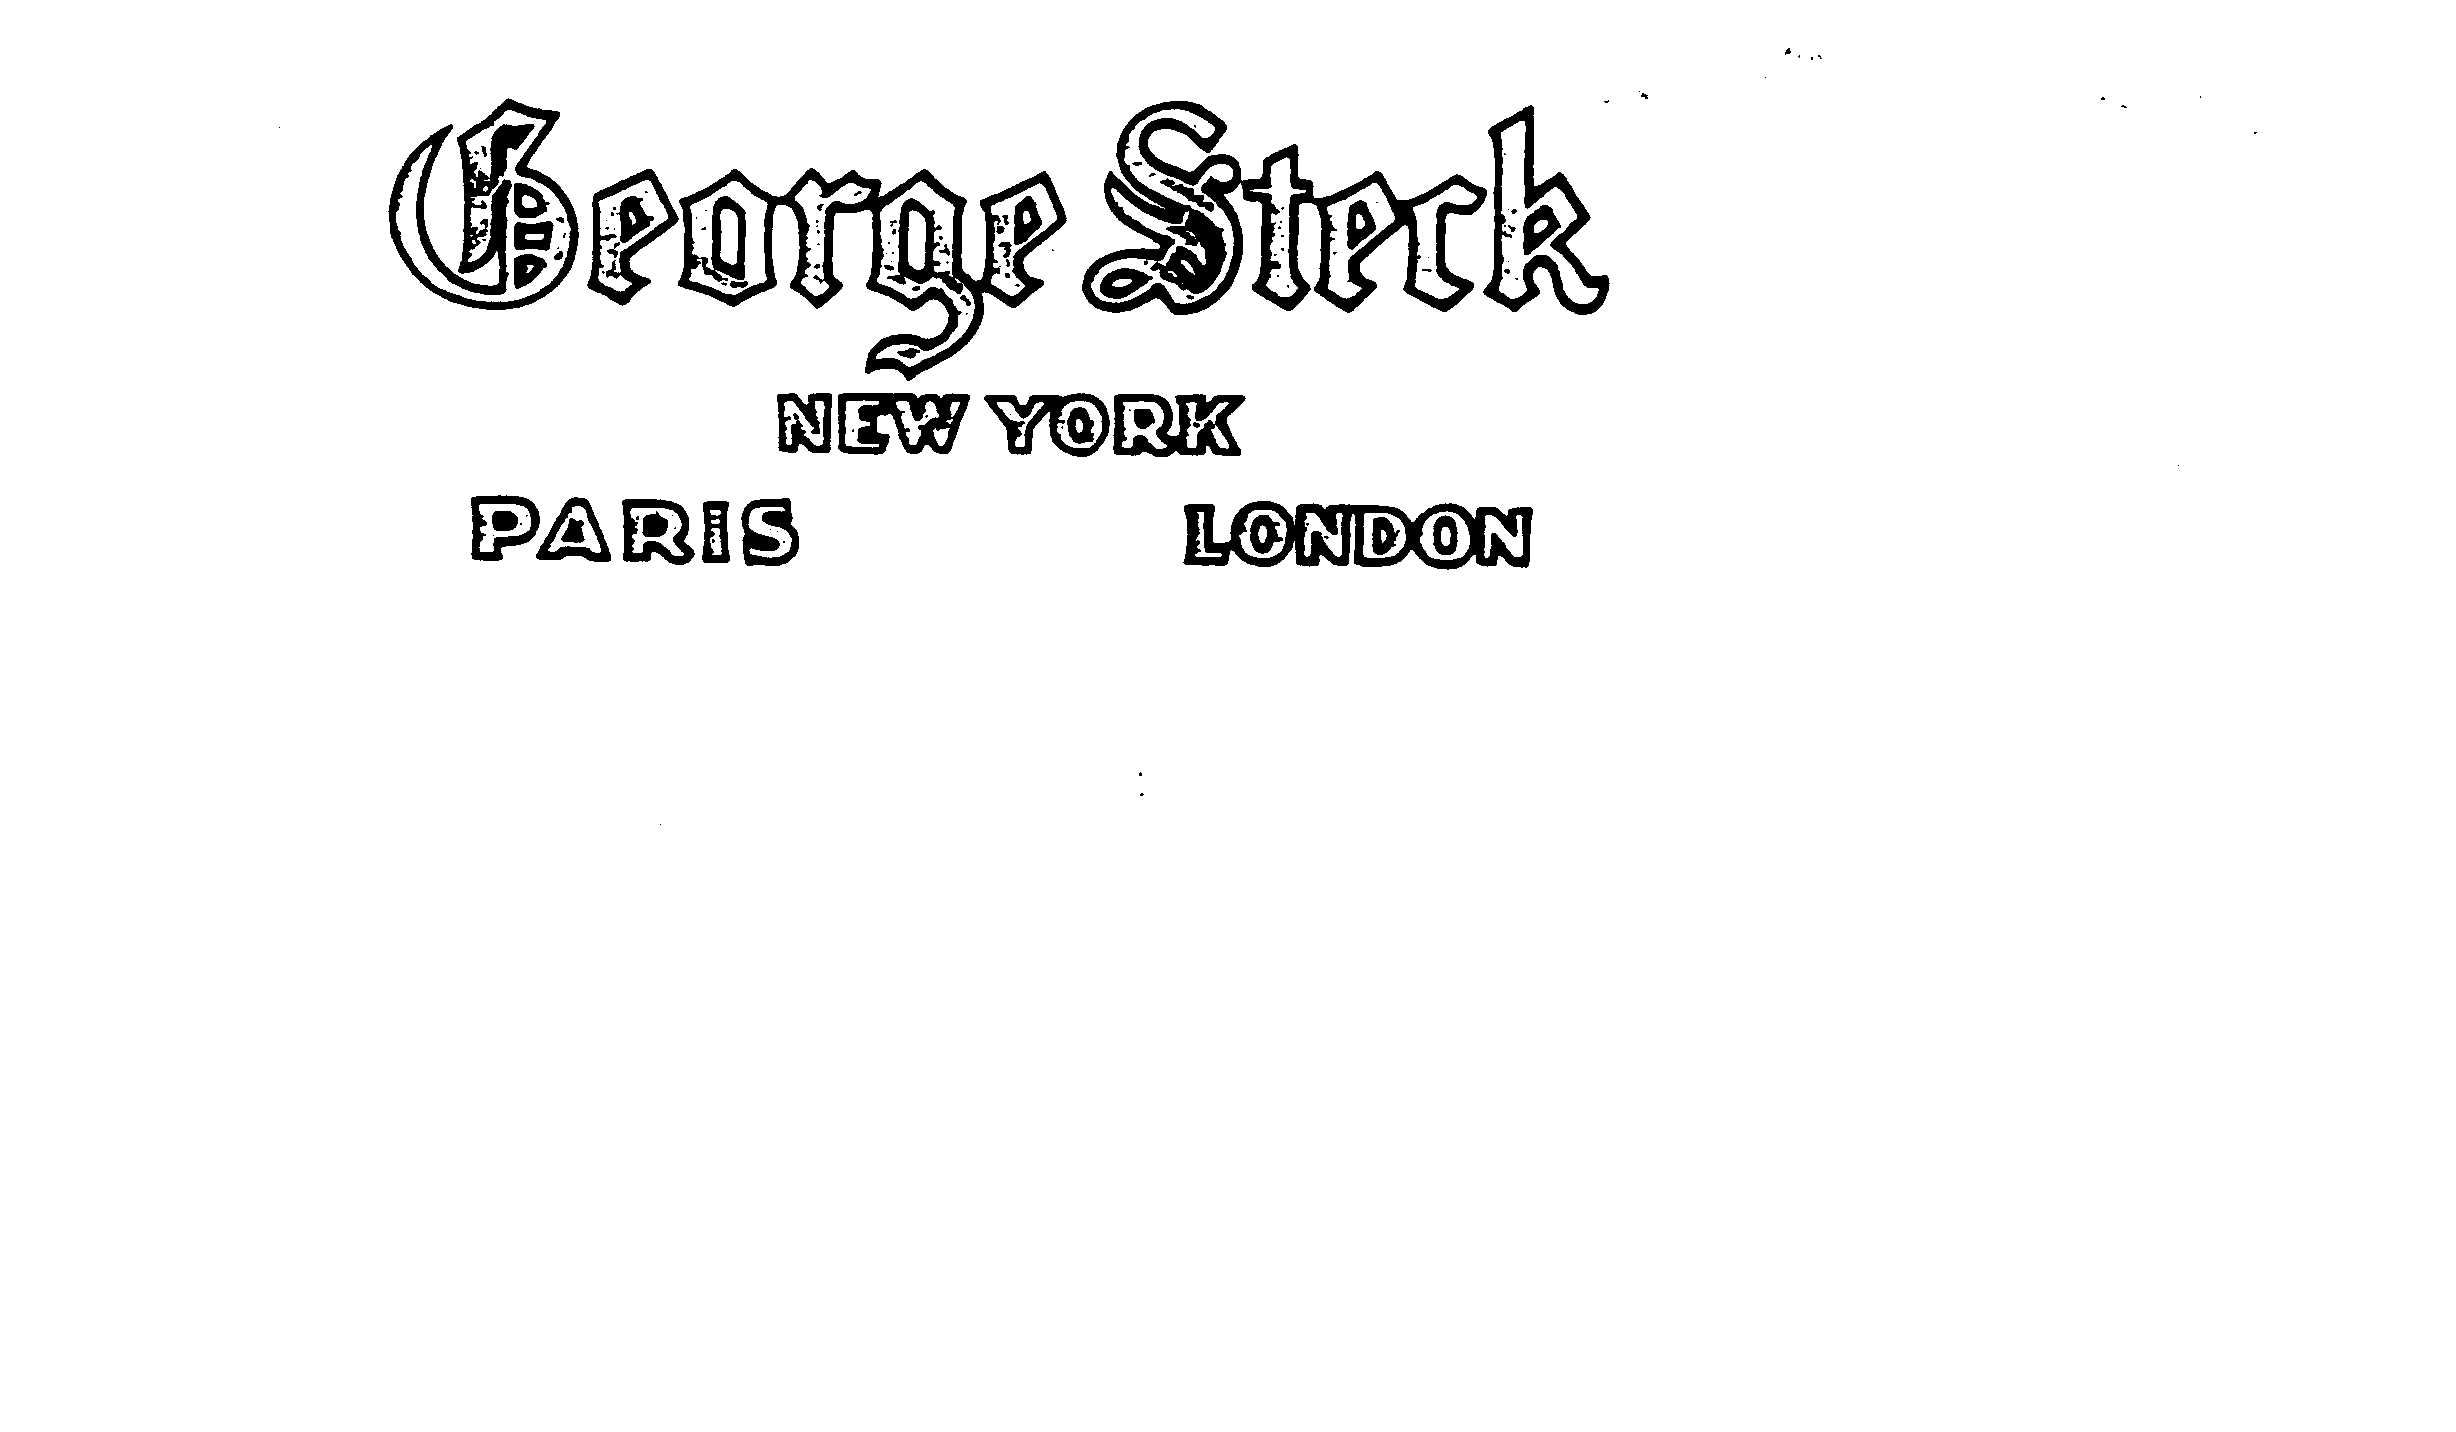  GEORGE STECK NEW YORK PARIS LONDON